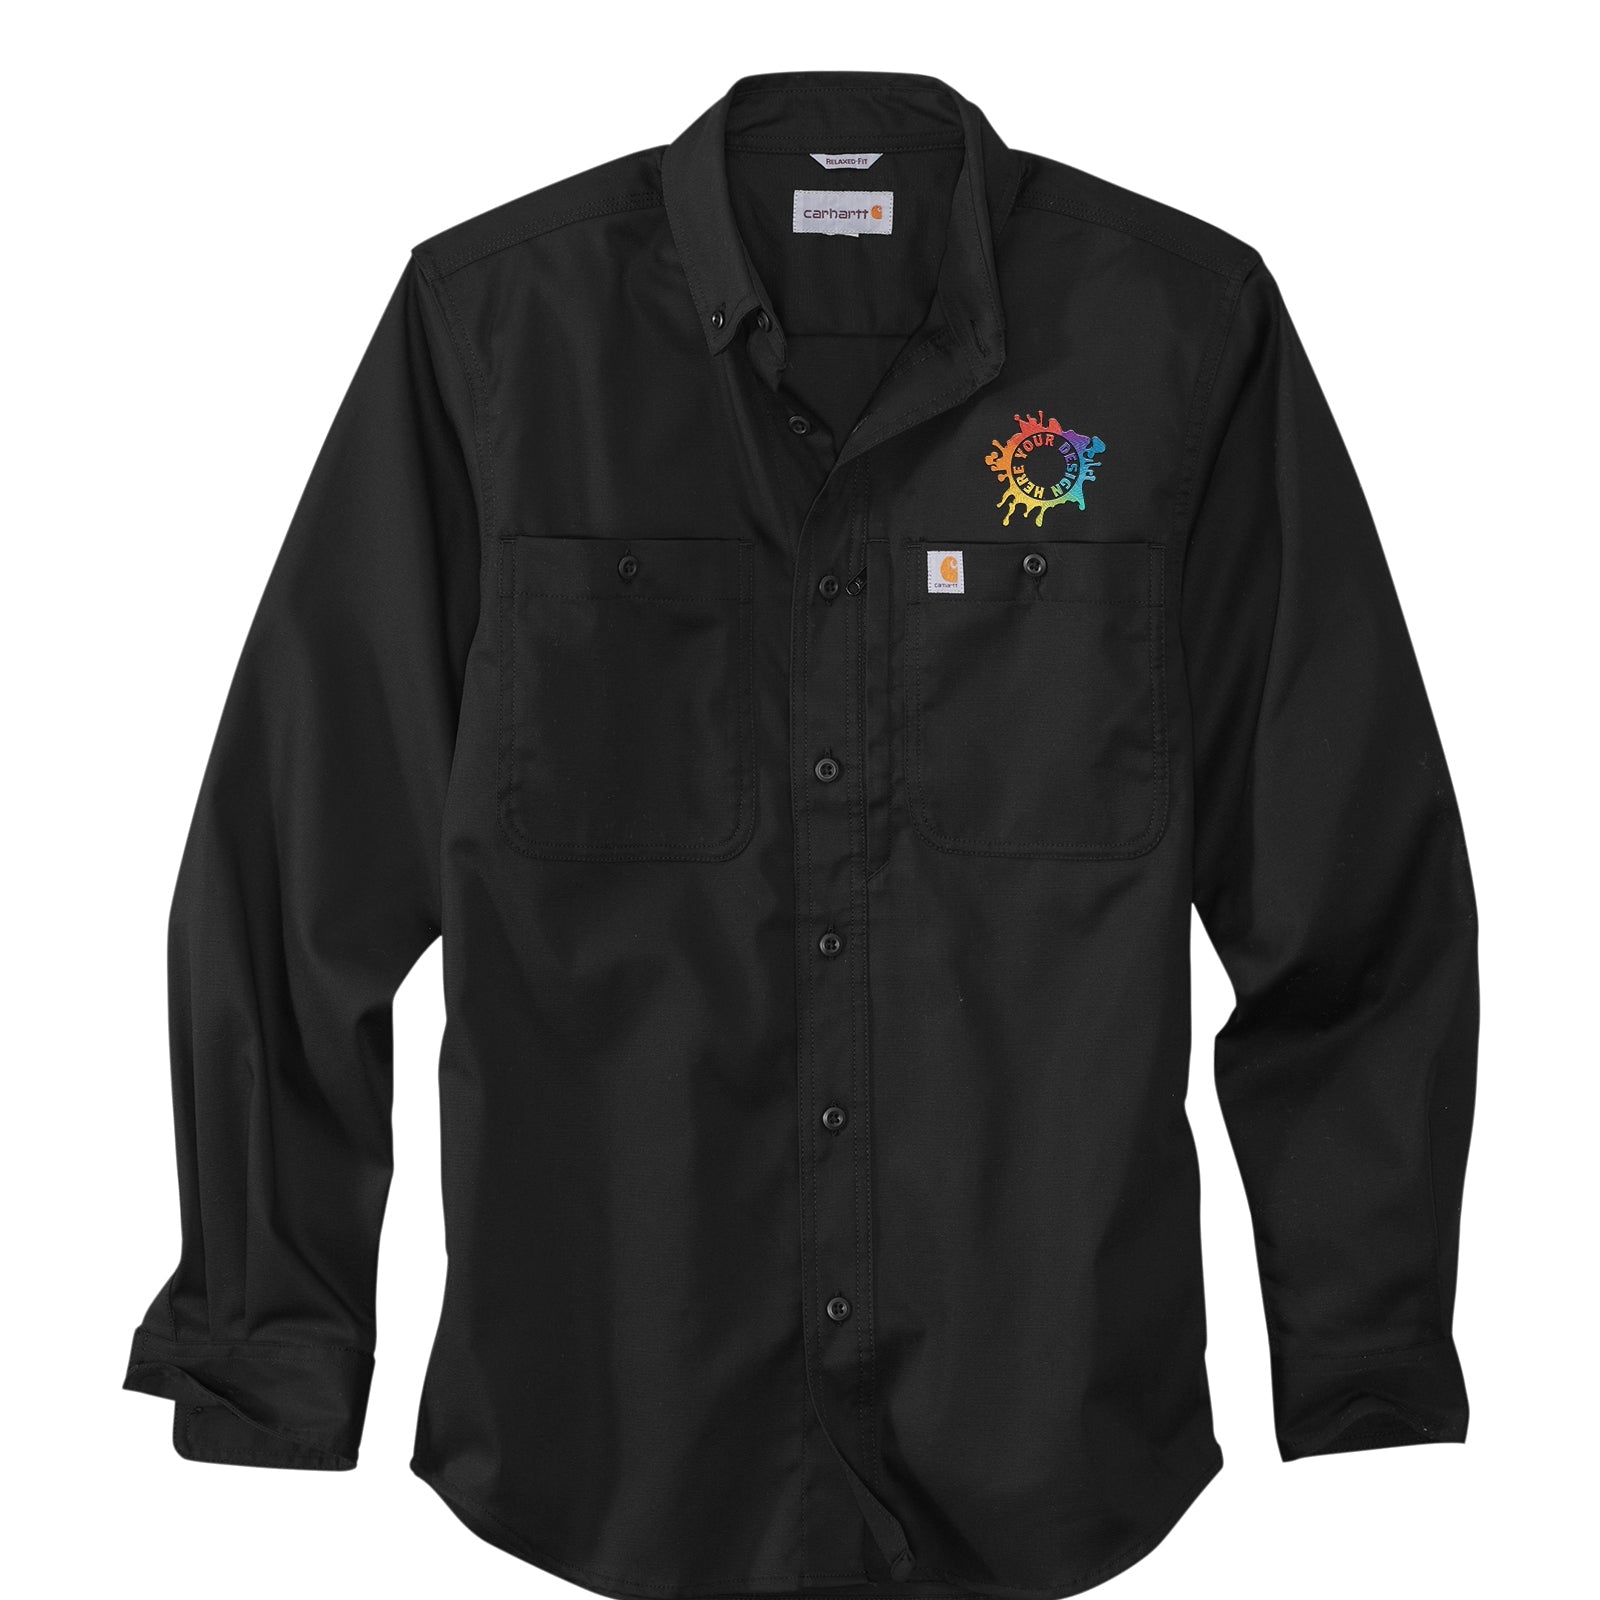 Carhartt Rugged Professional Series Long-Sleeve Shirt Embroidery - Mato & Hash